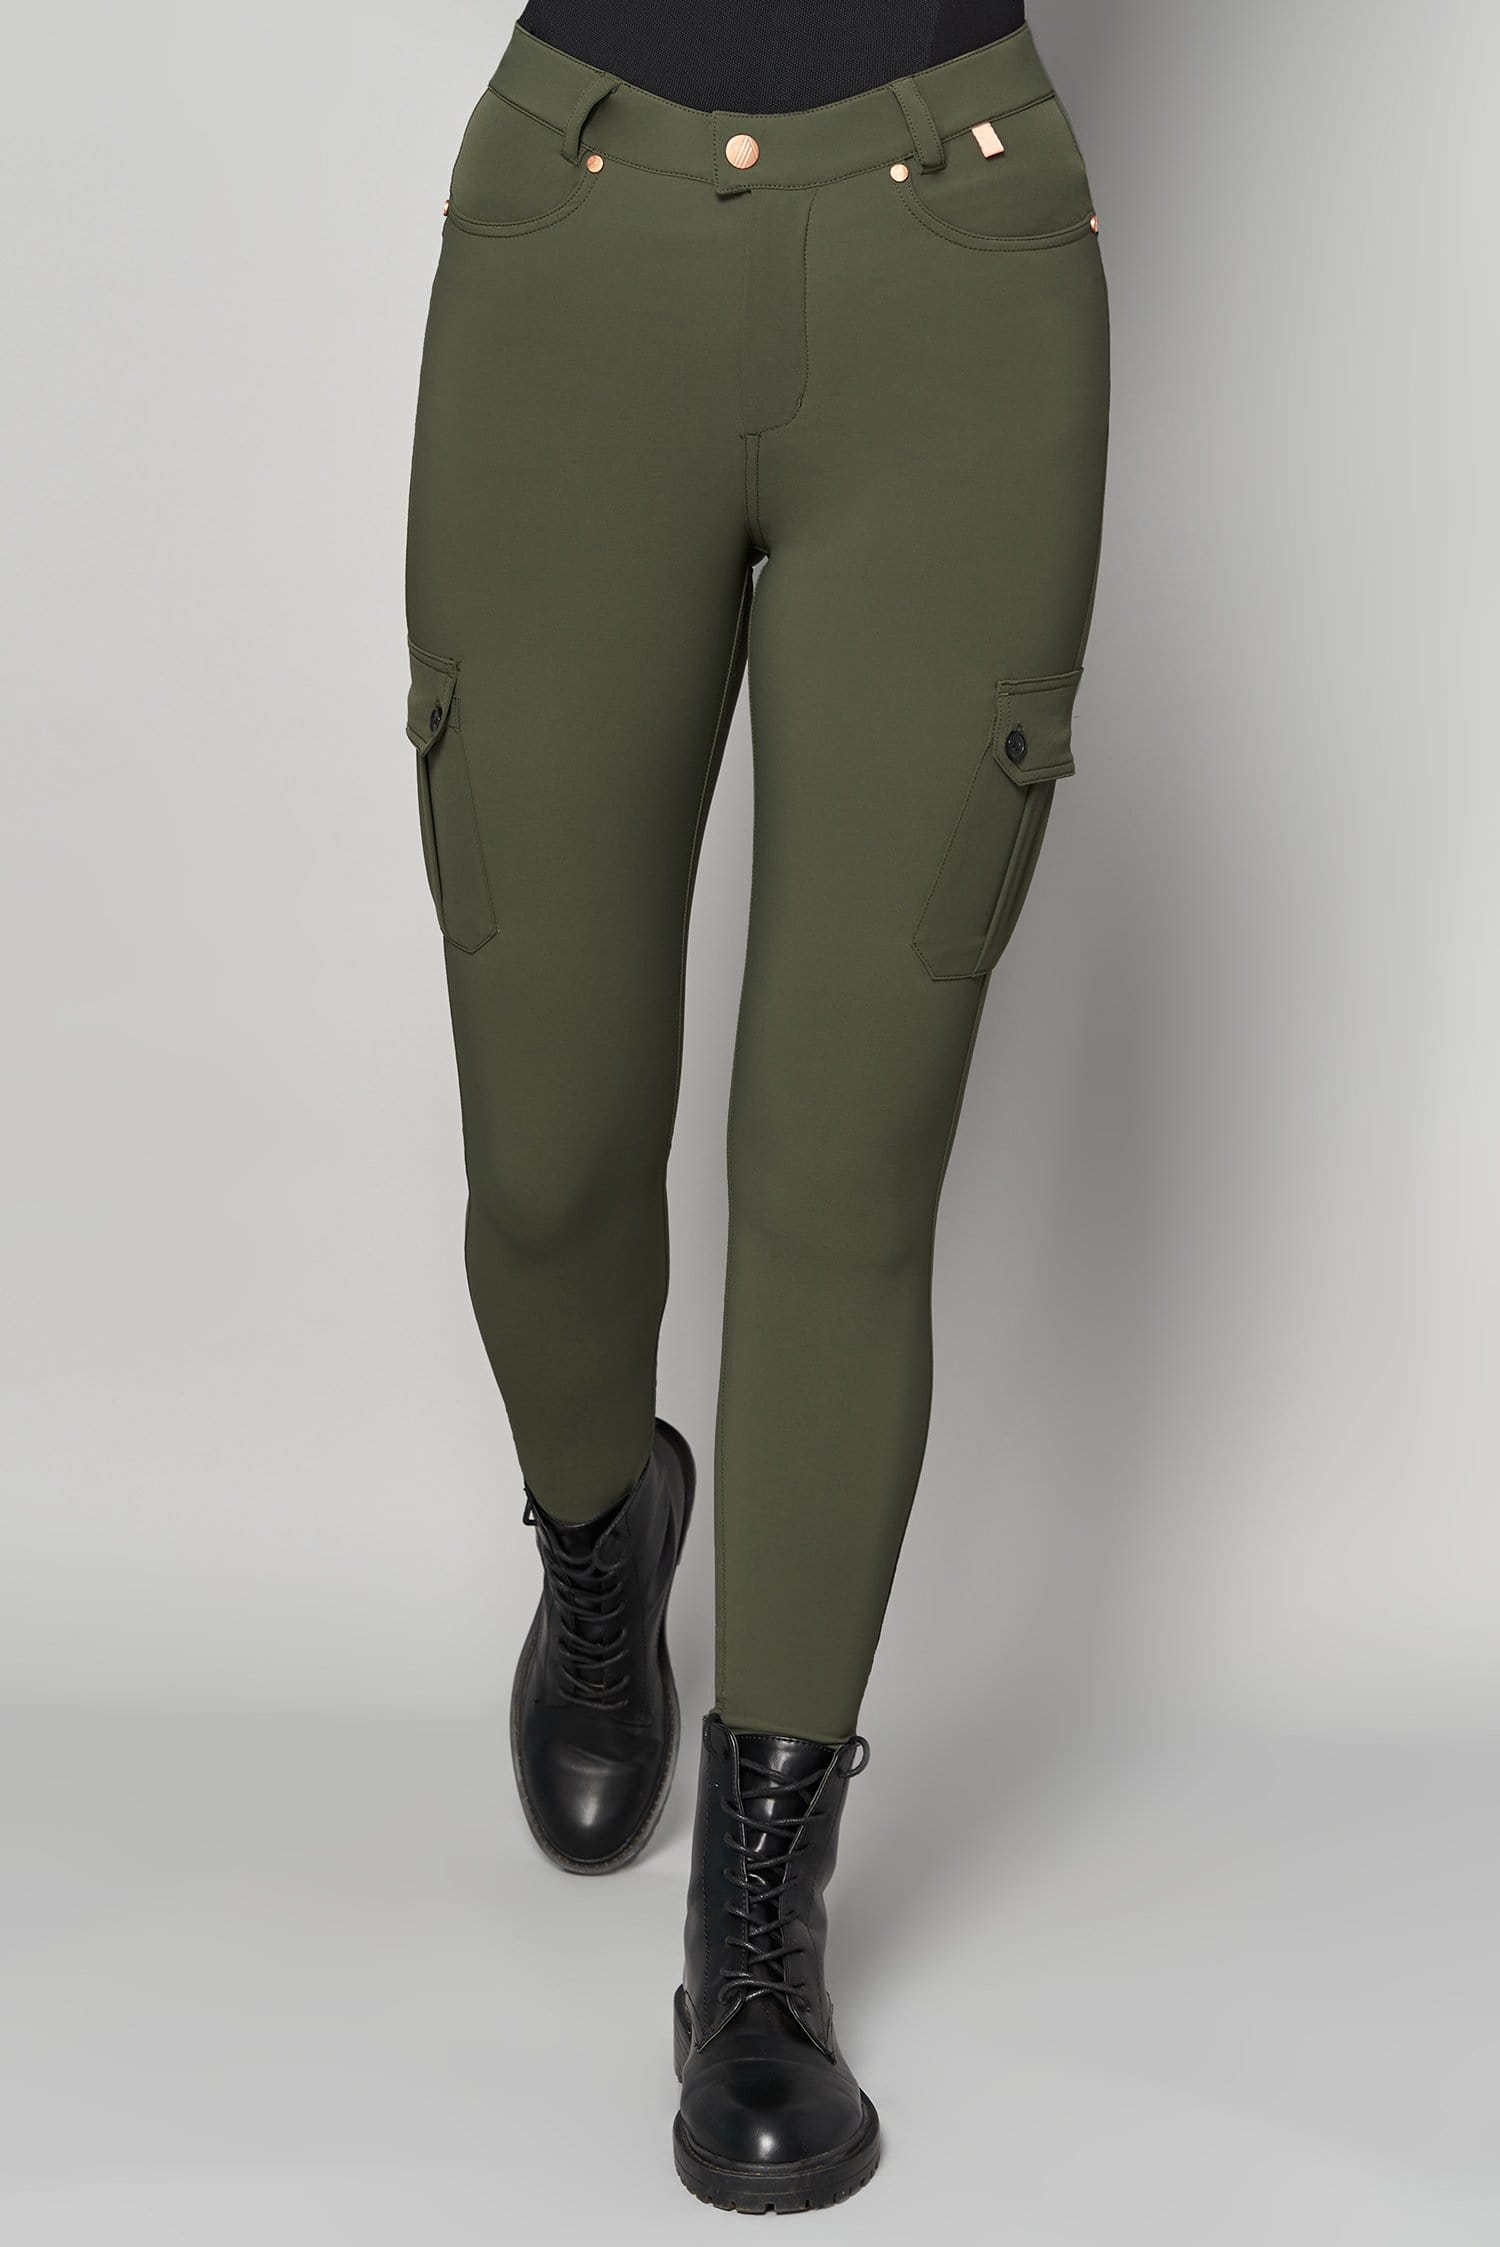 Cargo Max Stretch Outdoor Trousers - Khaki - 28p / Uk10 - Womens - Acai Outdoorwear